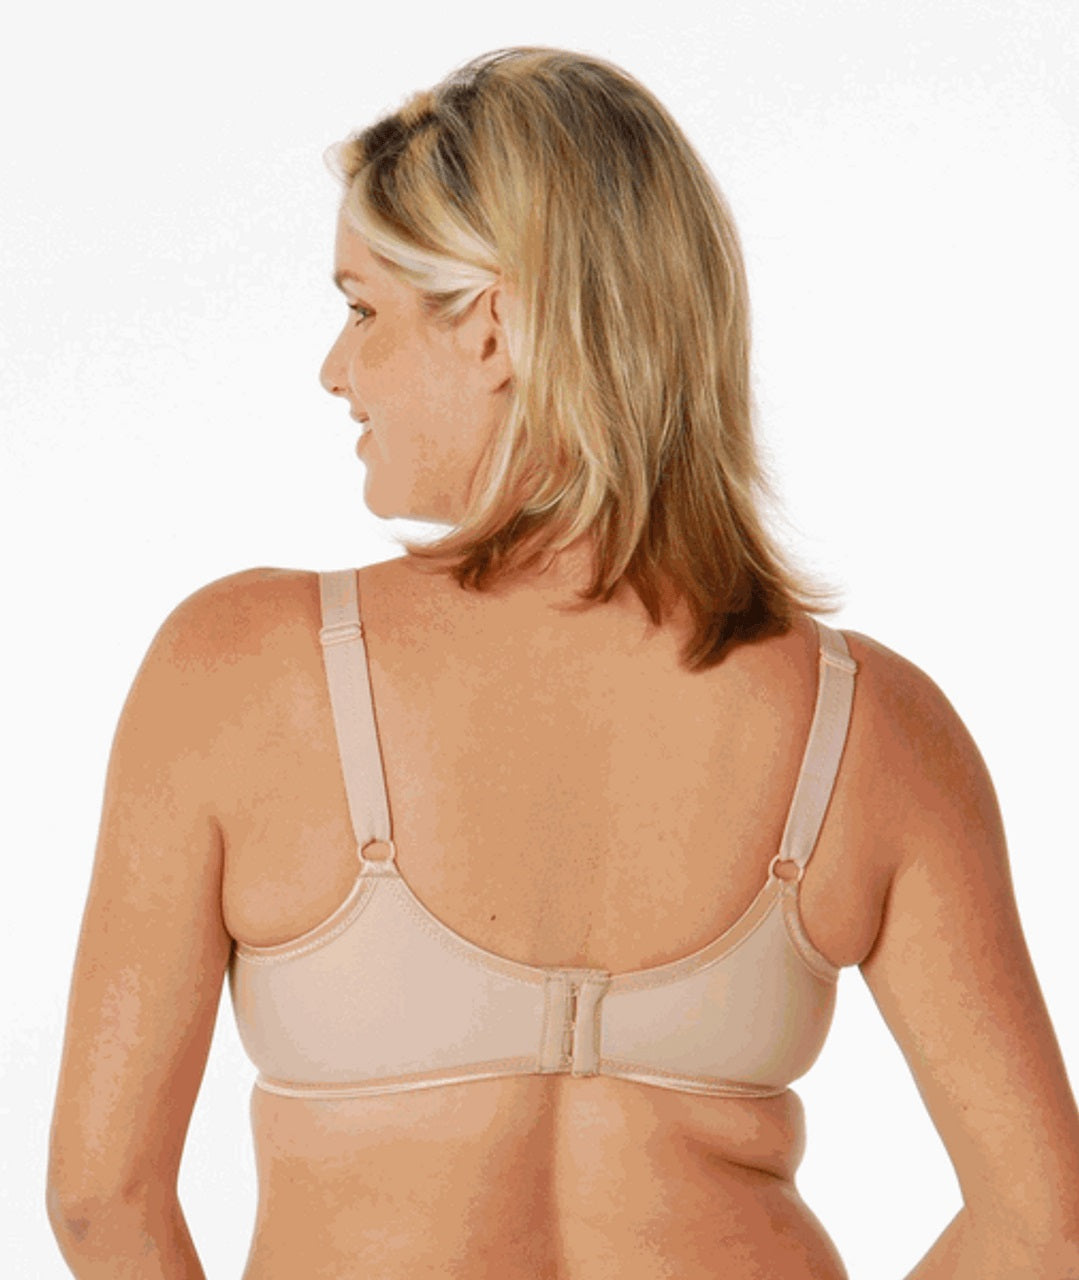 Melinda G Tee-Shirt Underwire Nursing Bra in Nude, Size 34D